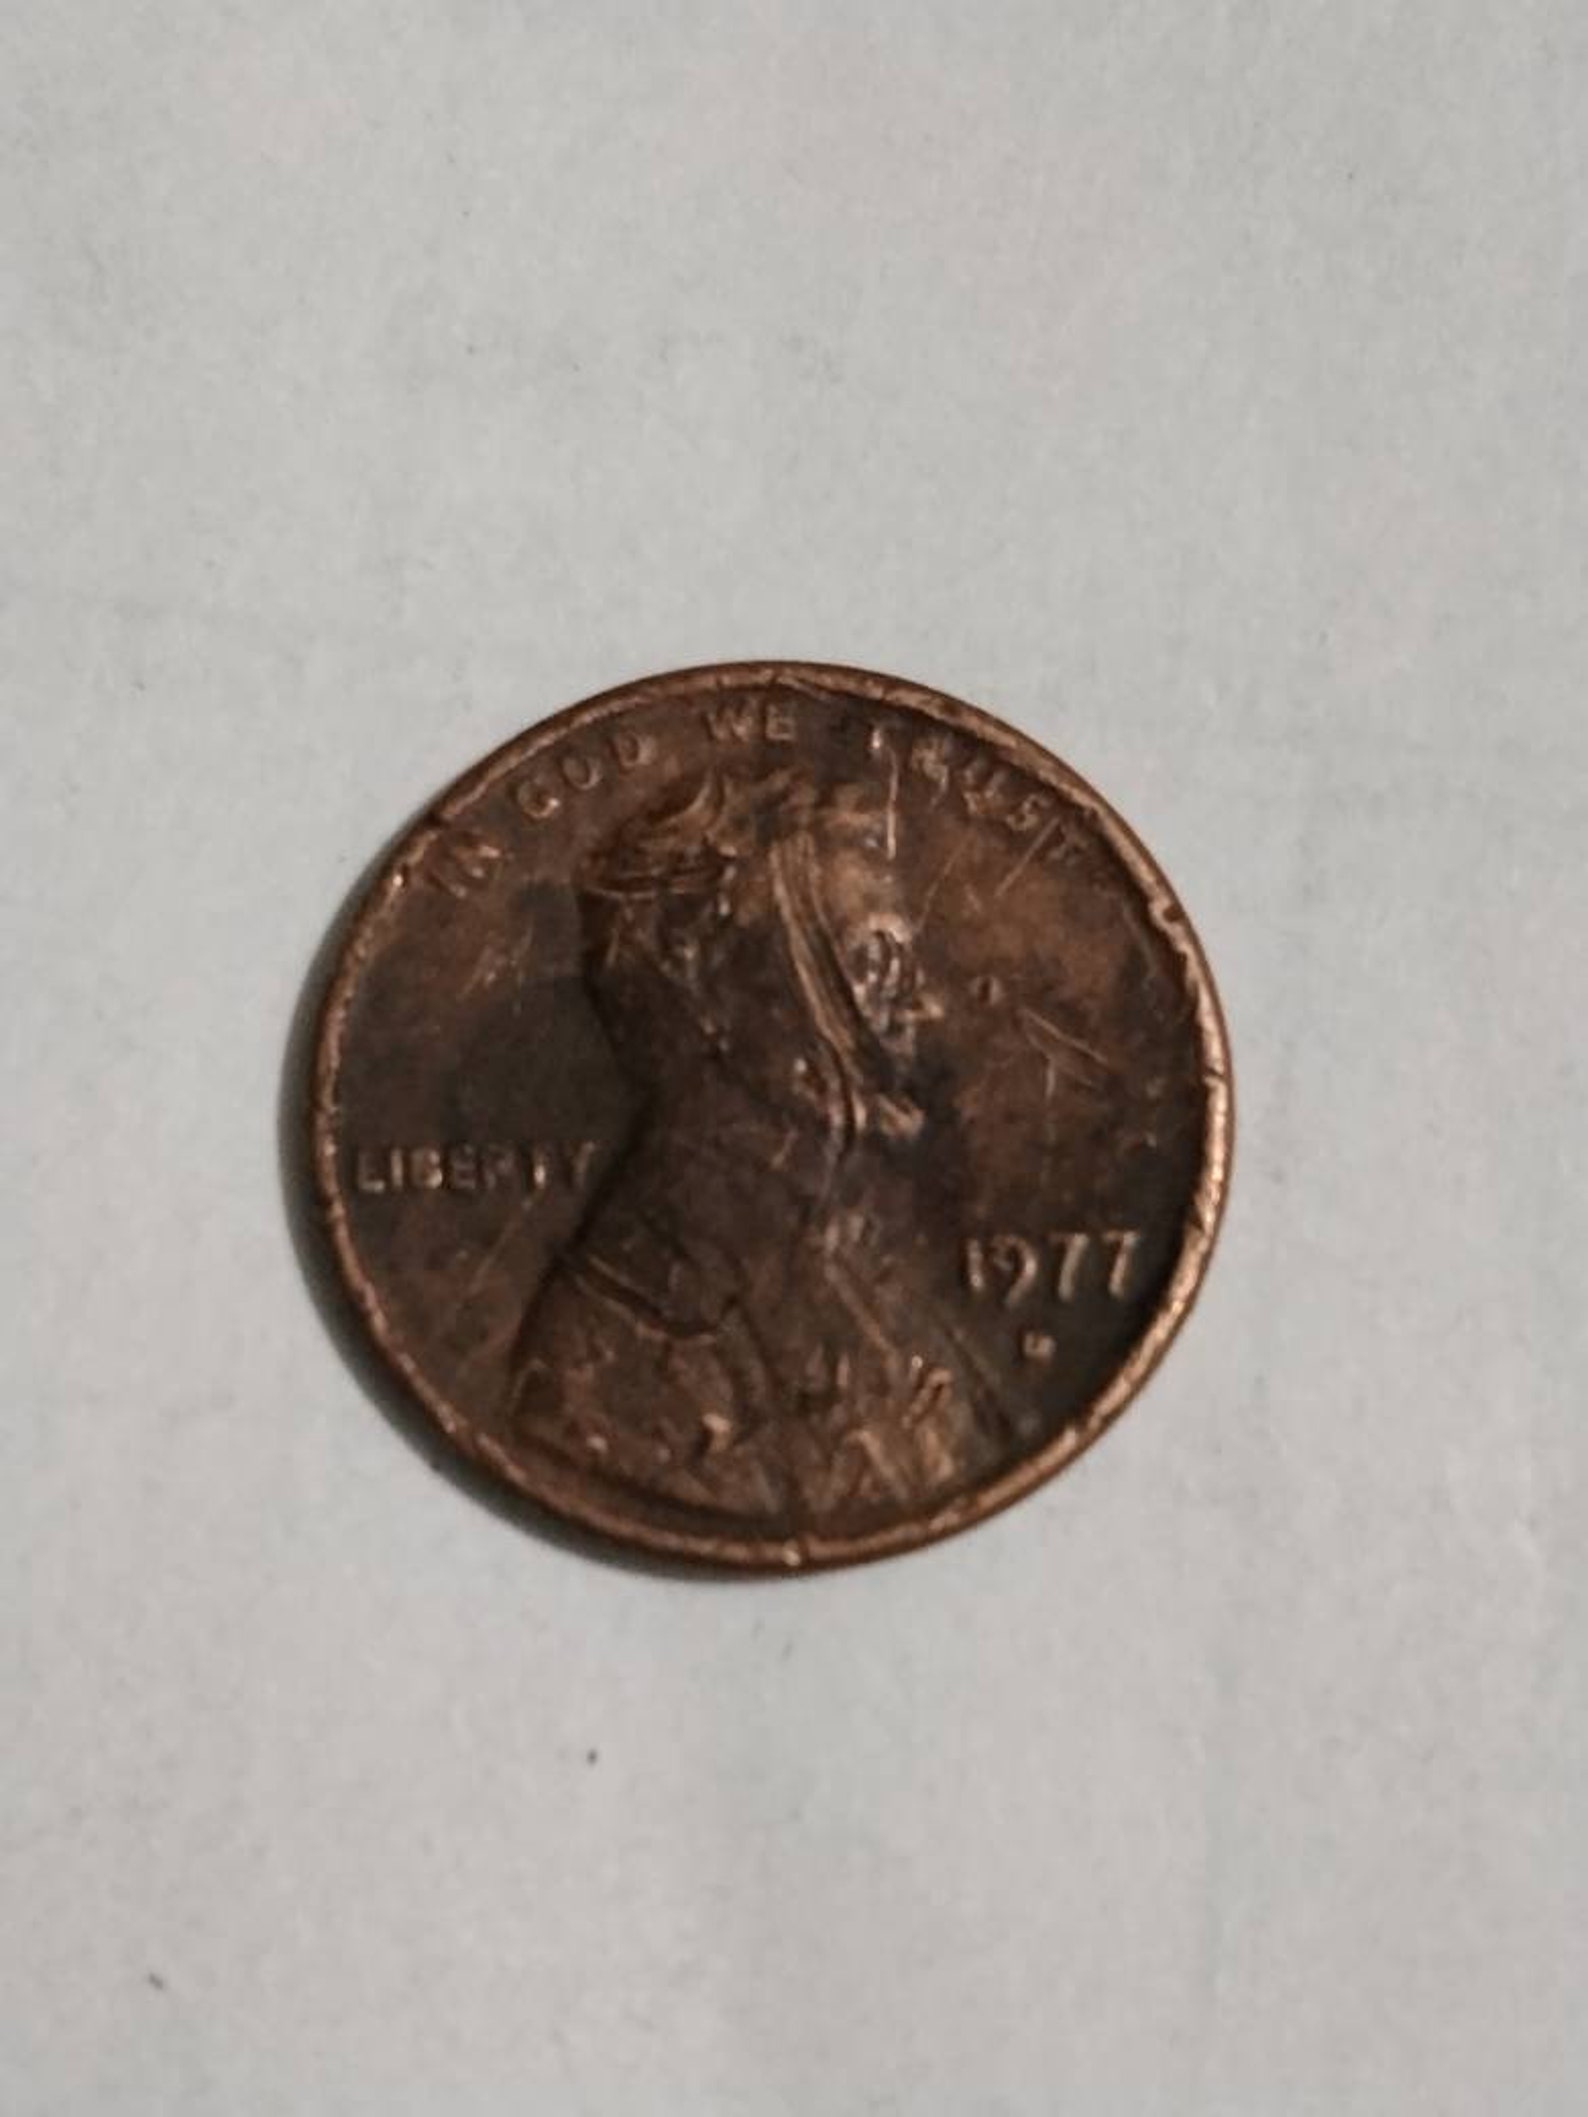 1 cent usa mint error rare coin | Etsy